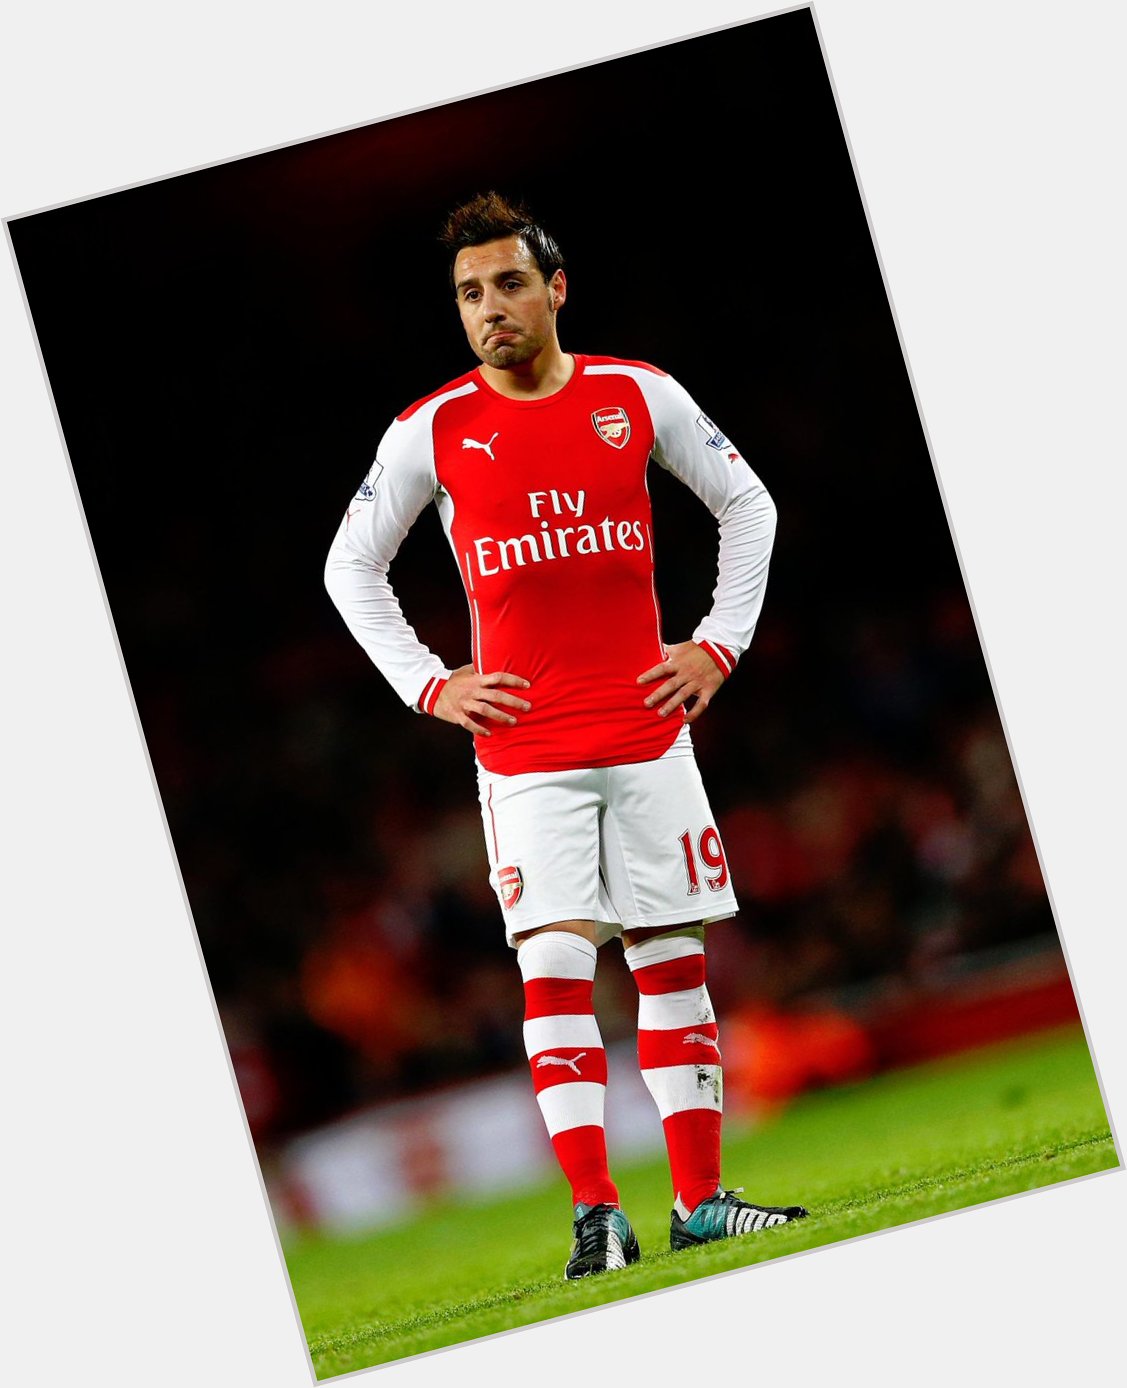 Happy 30th birthday to Spain and Arsenal playmaker Santi Cazorla! 